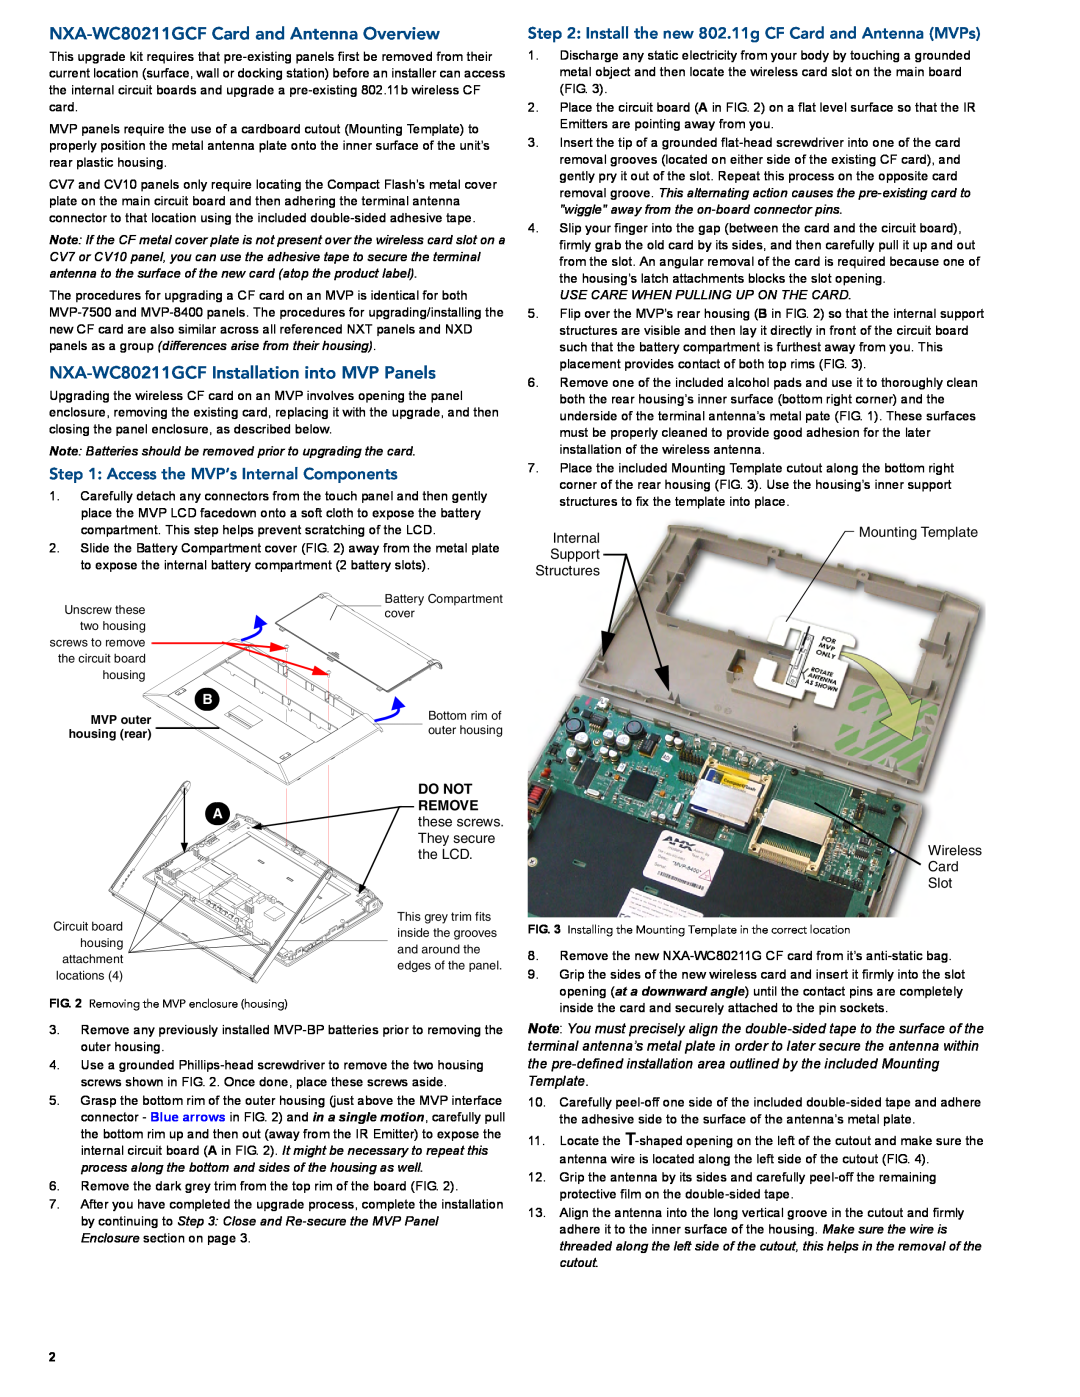 AMX NXA-WC80211GCF Card and Antenna Overview, NXA-WC80211GCF Installation into MVP Panels, Internal, Mounting Template 